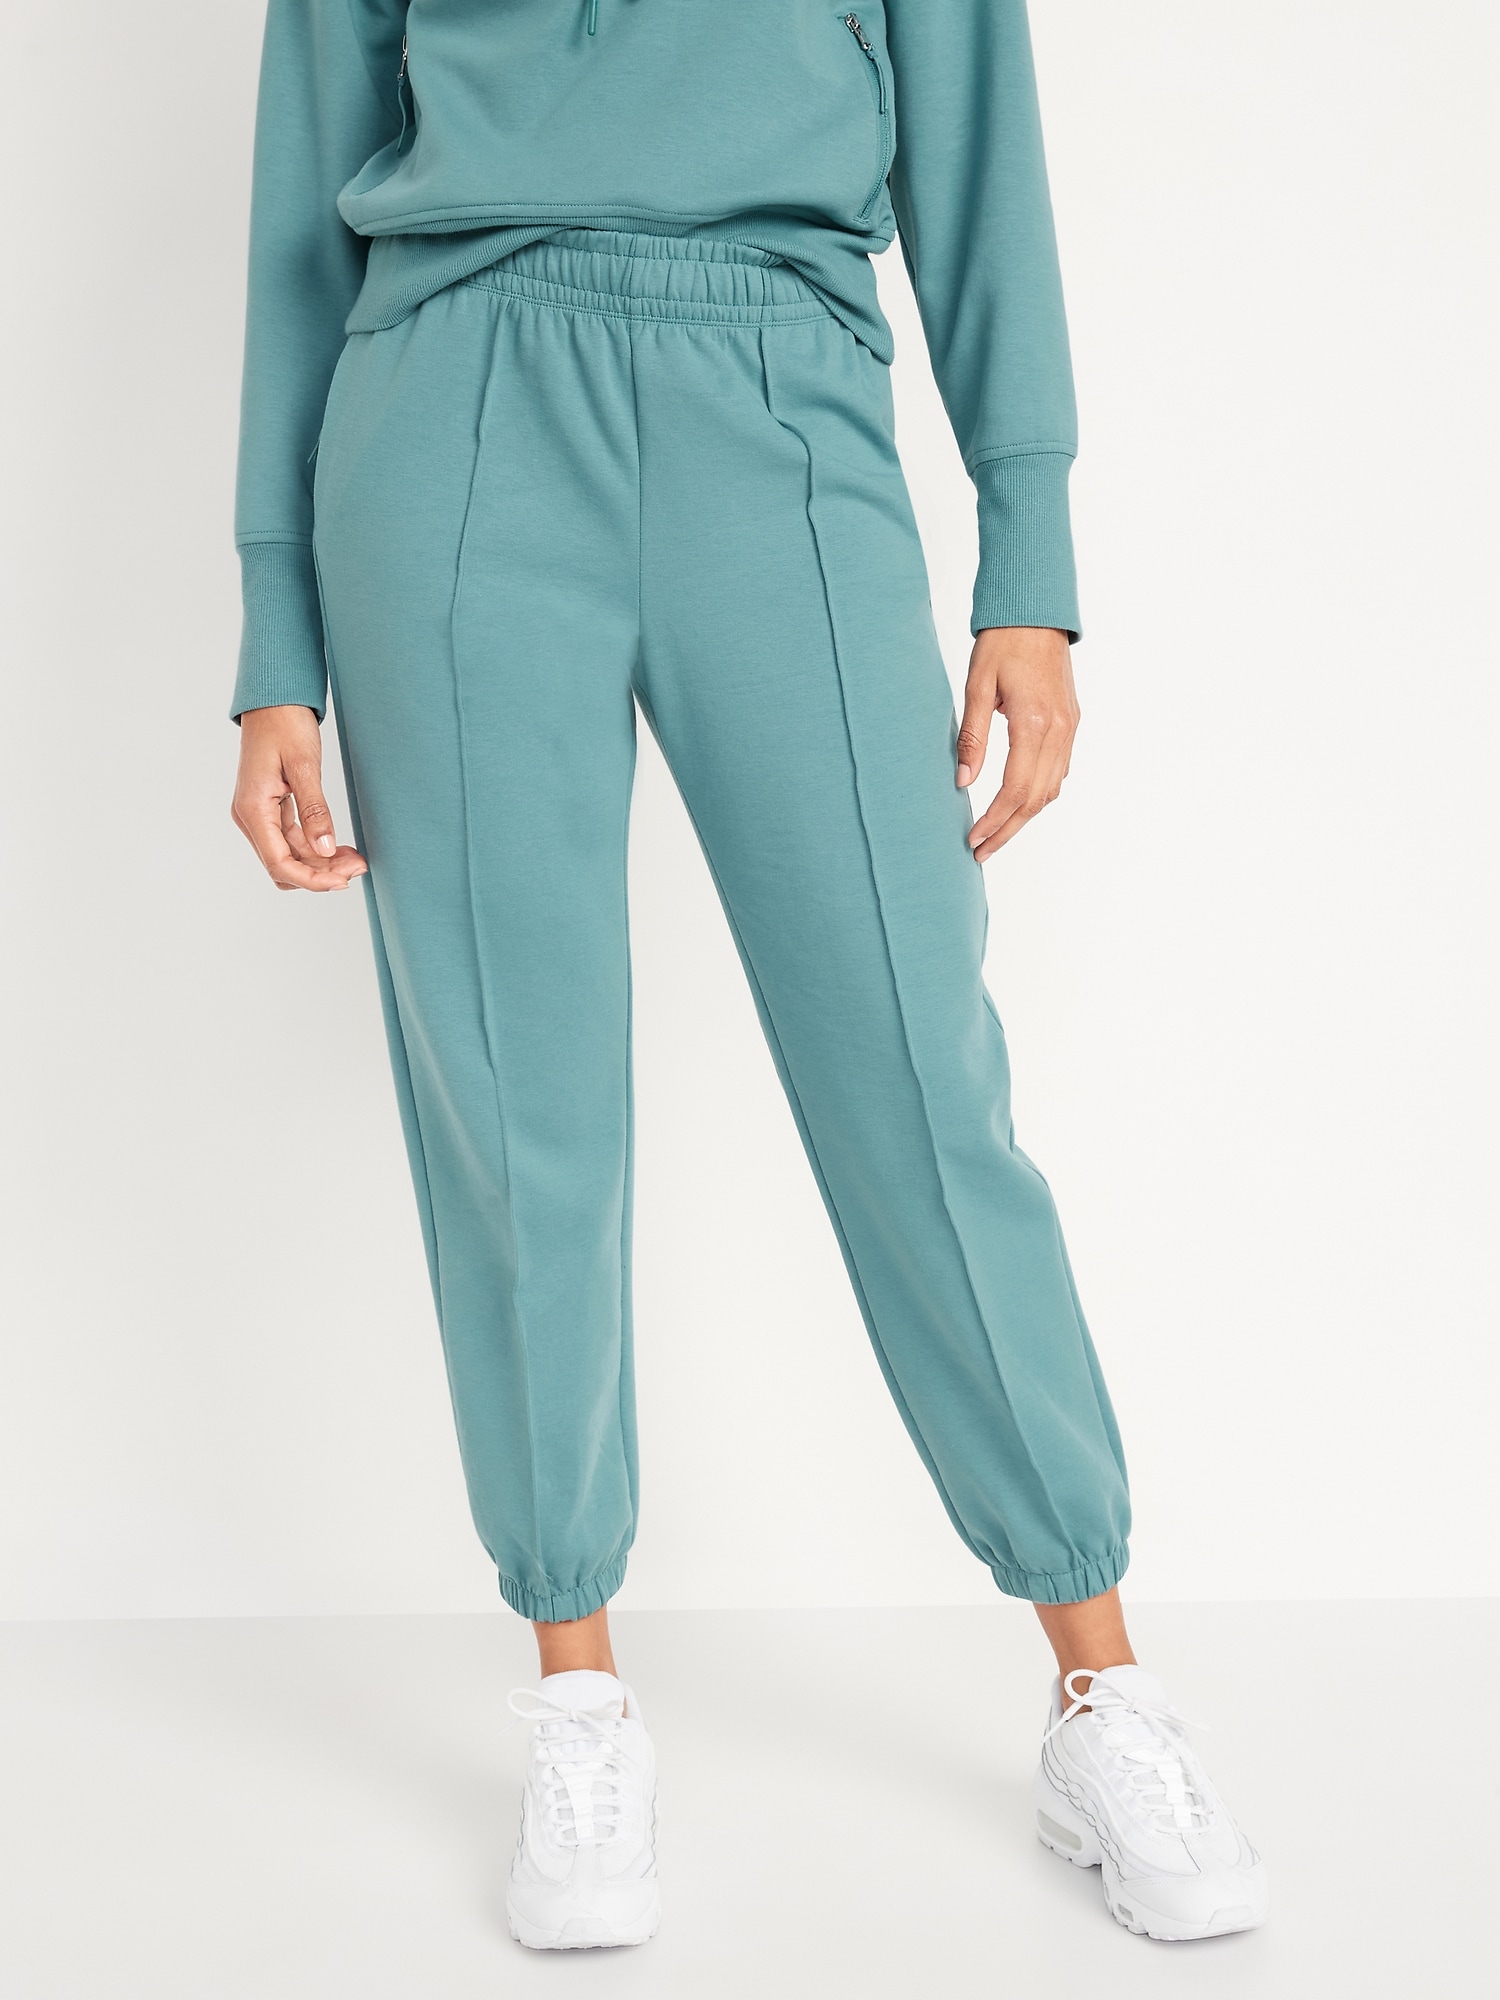 Lole Women's High-Rise Sweatpants, Lounge Pant, Joggers | Dark Green Pants